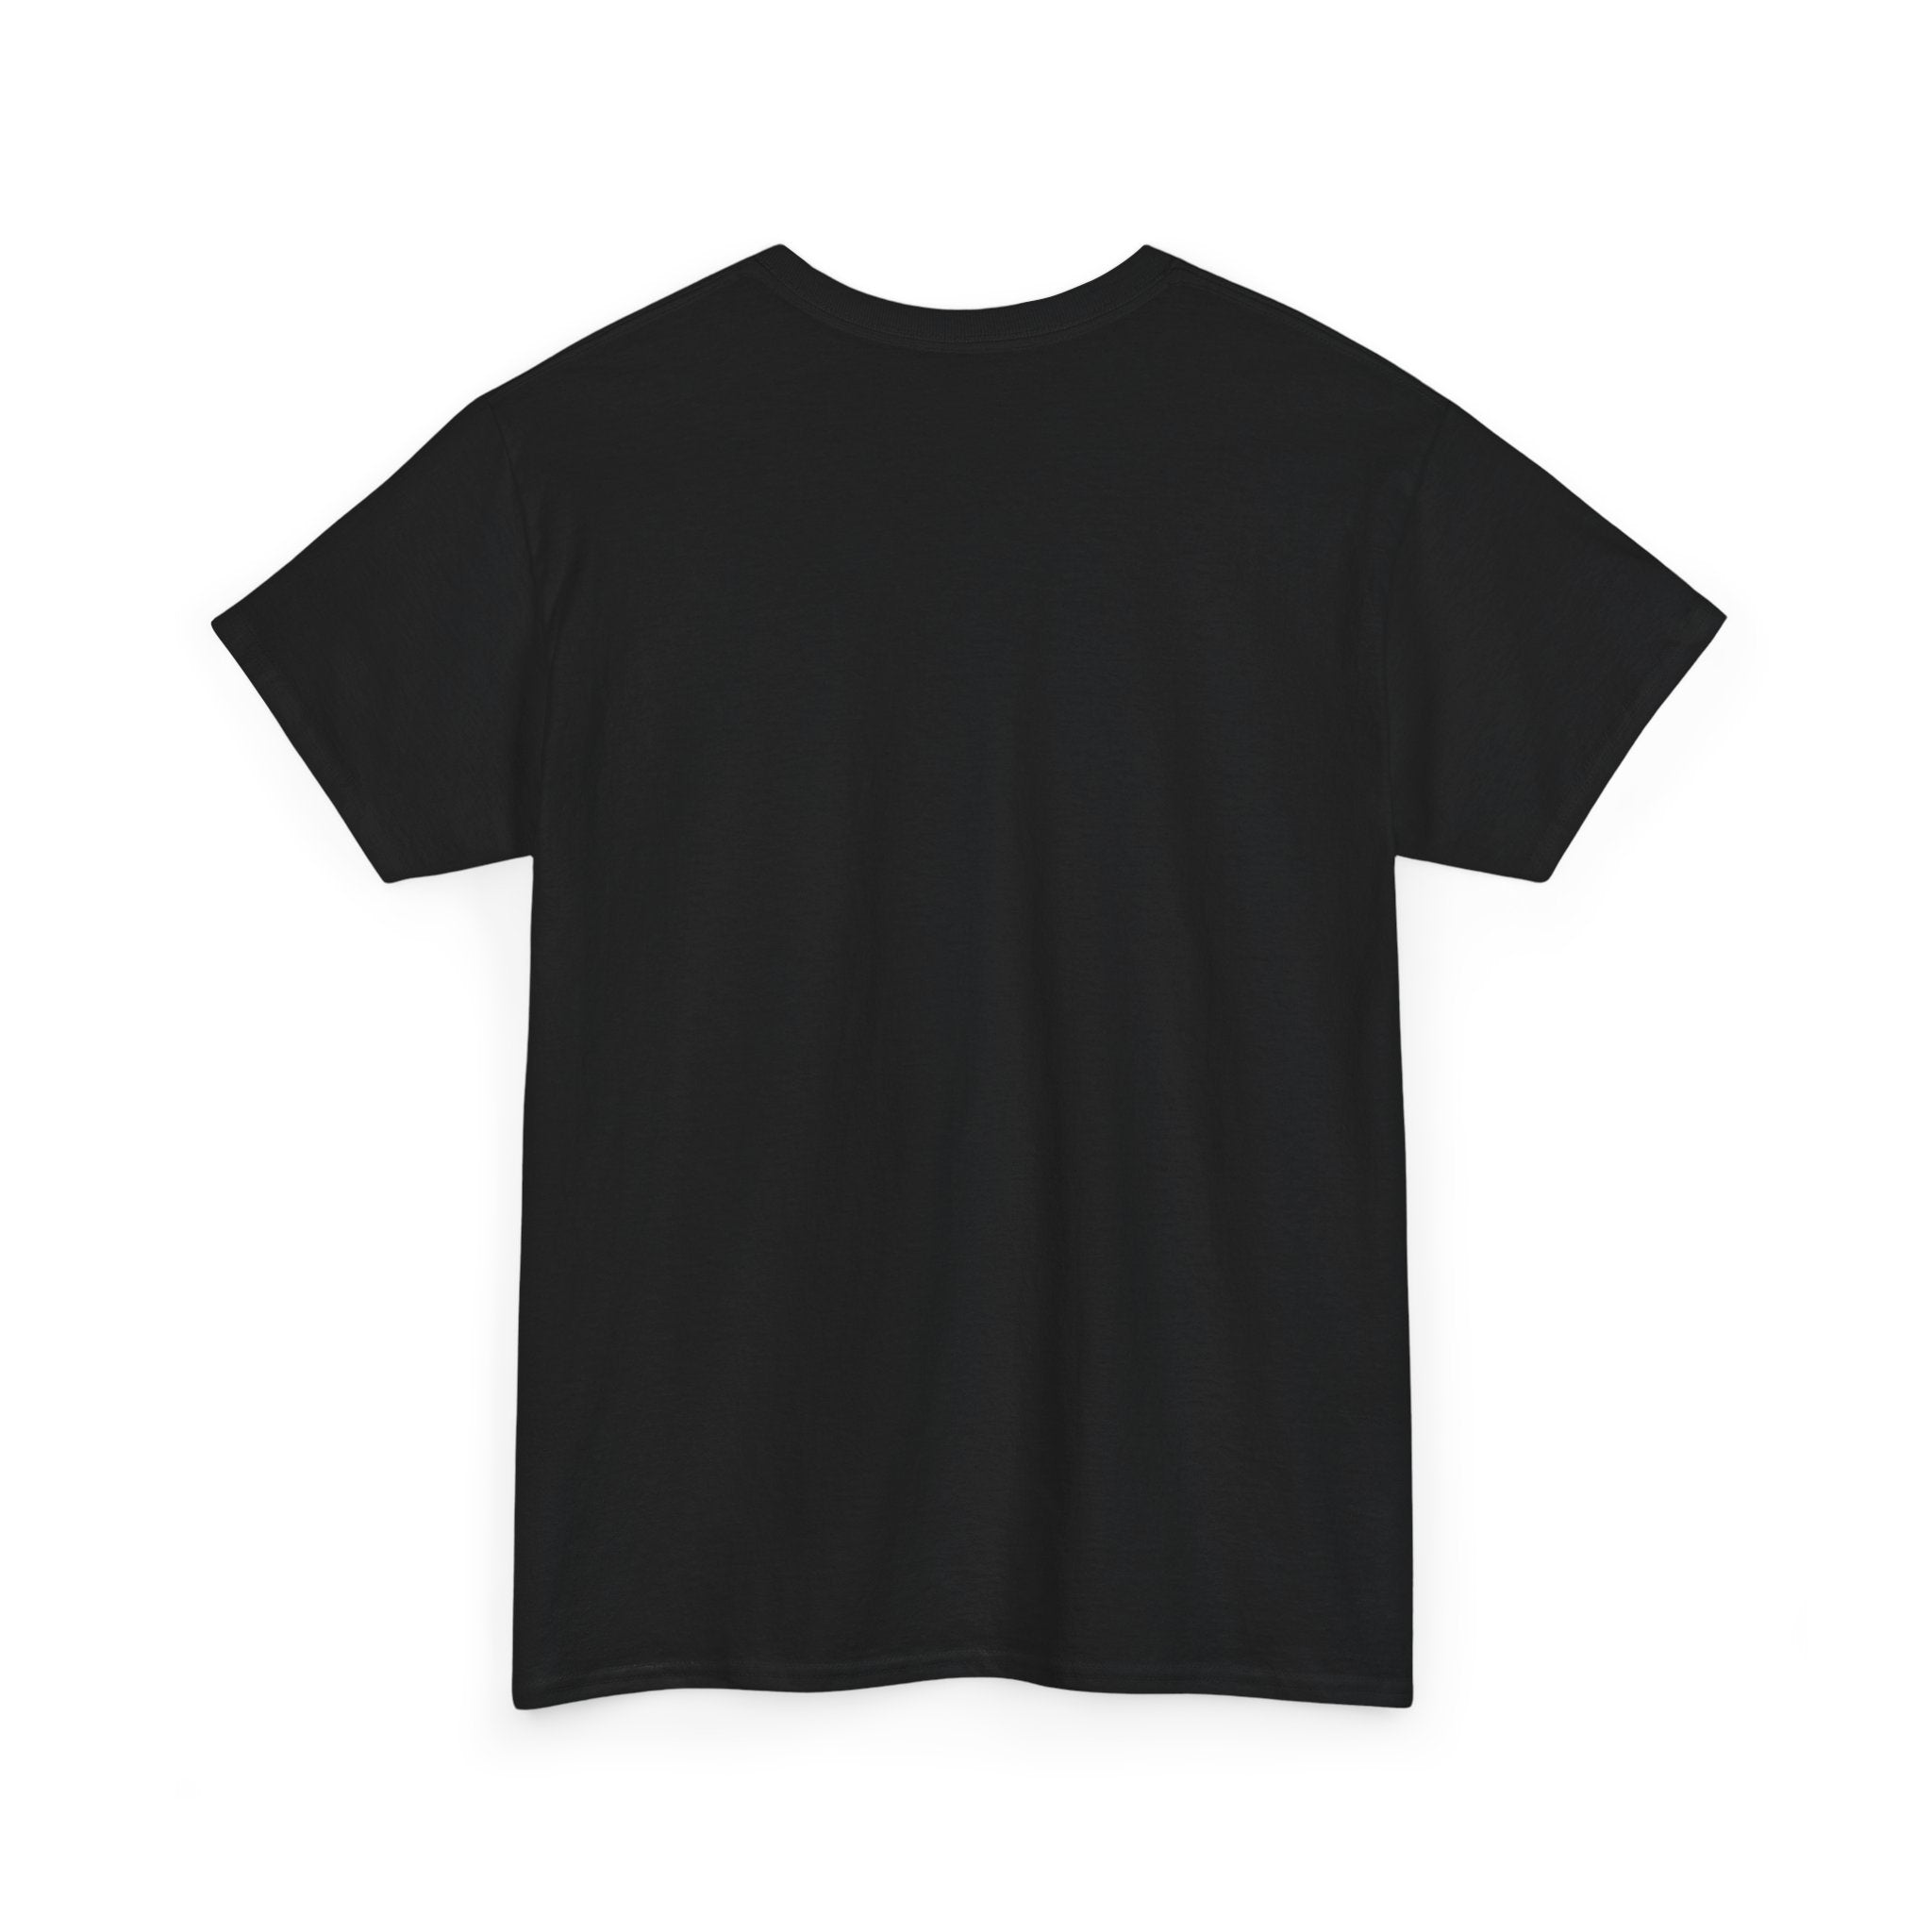 Conor McGregor "PB" T-Shirt